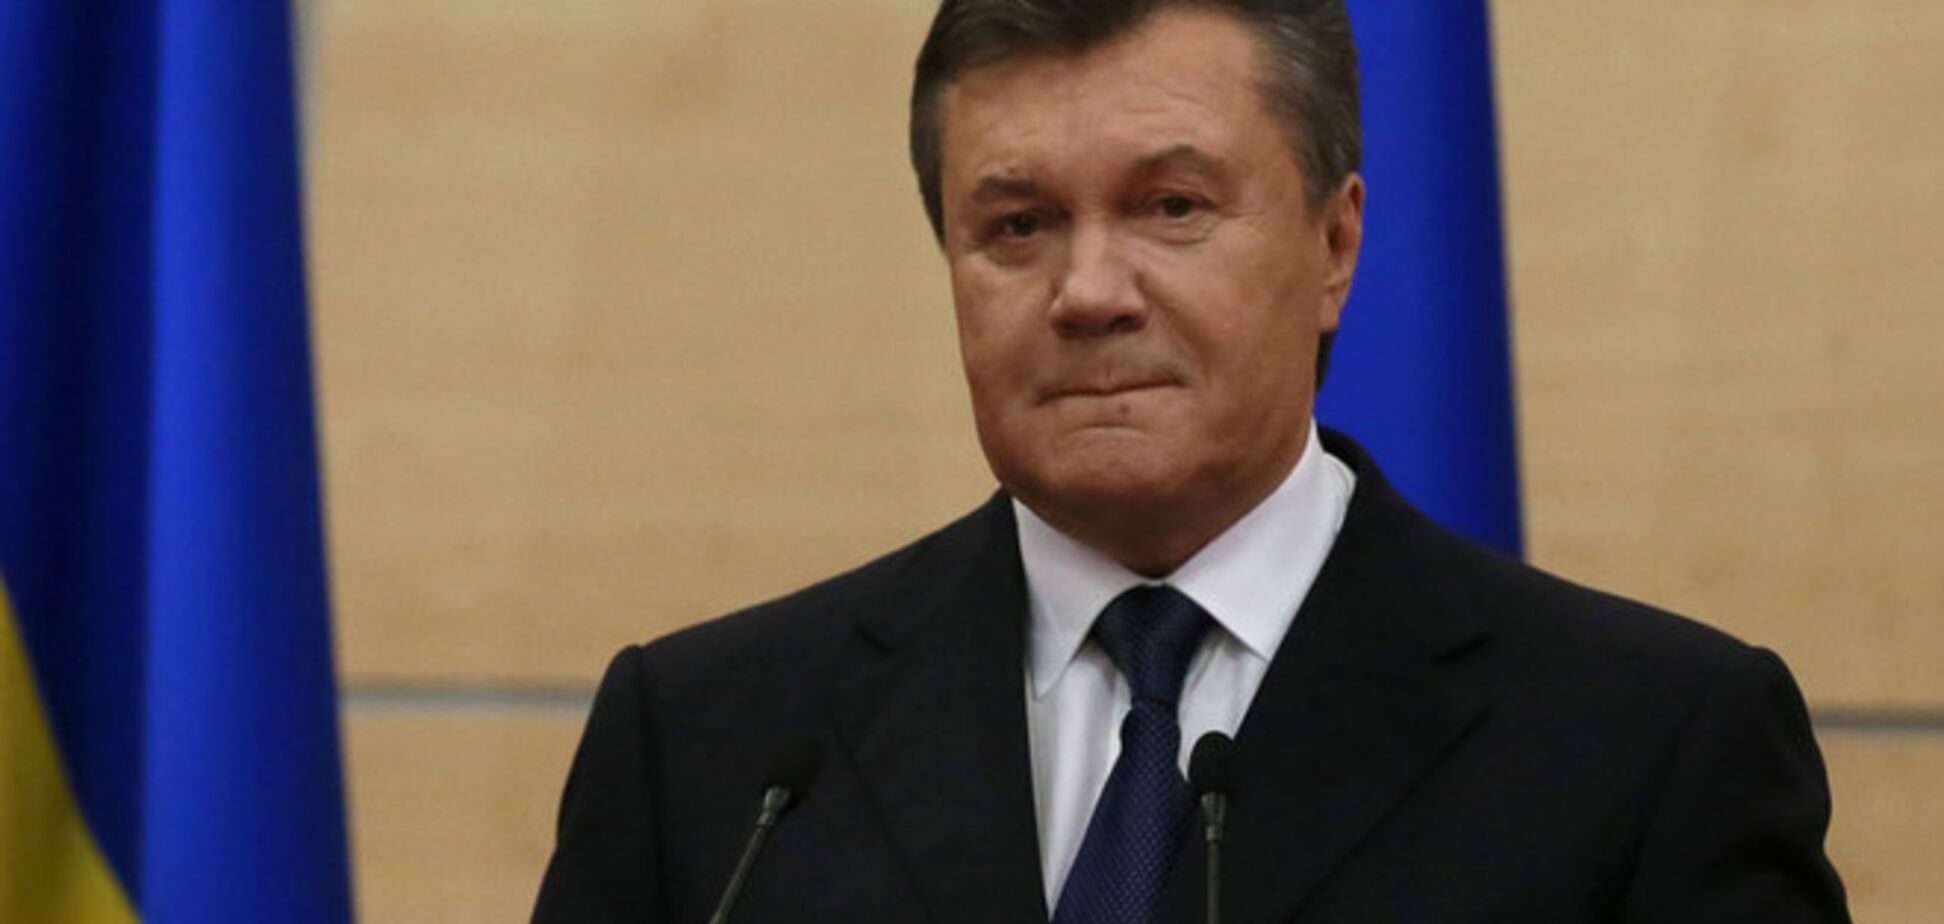 Силовики во время зачистки периметра в зоне АТО нашли конюшню Януковича